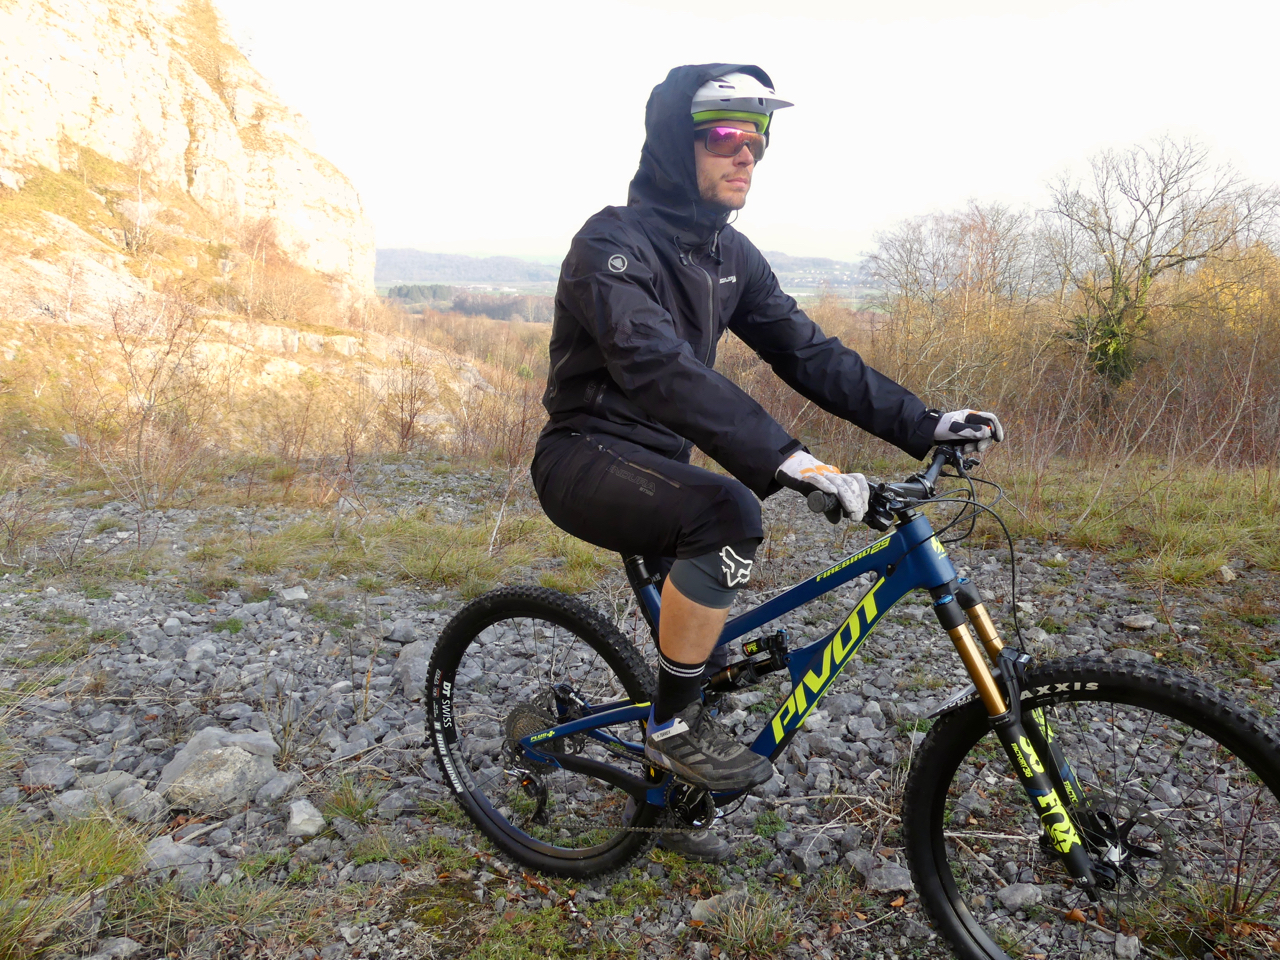 Endura Mt500 Waterproof Suit 19 Mountain Bike Reviews Clothing Jackets Imb Free Mountain Bike Magazine Online